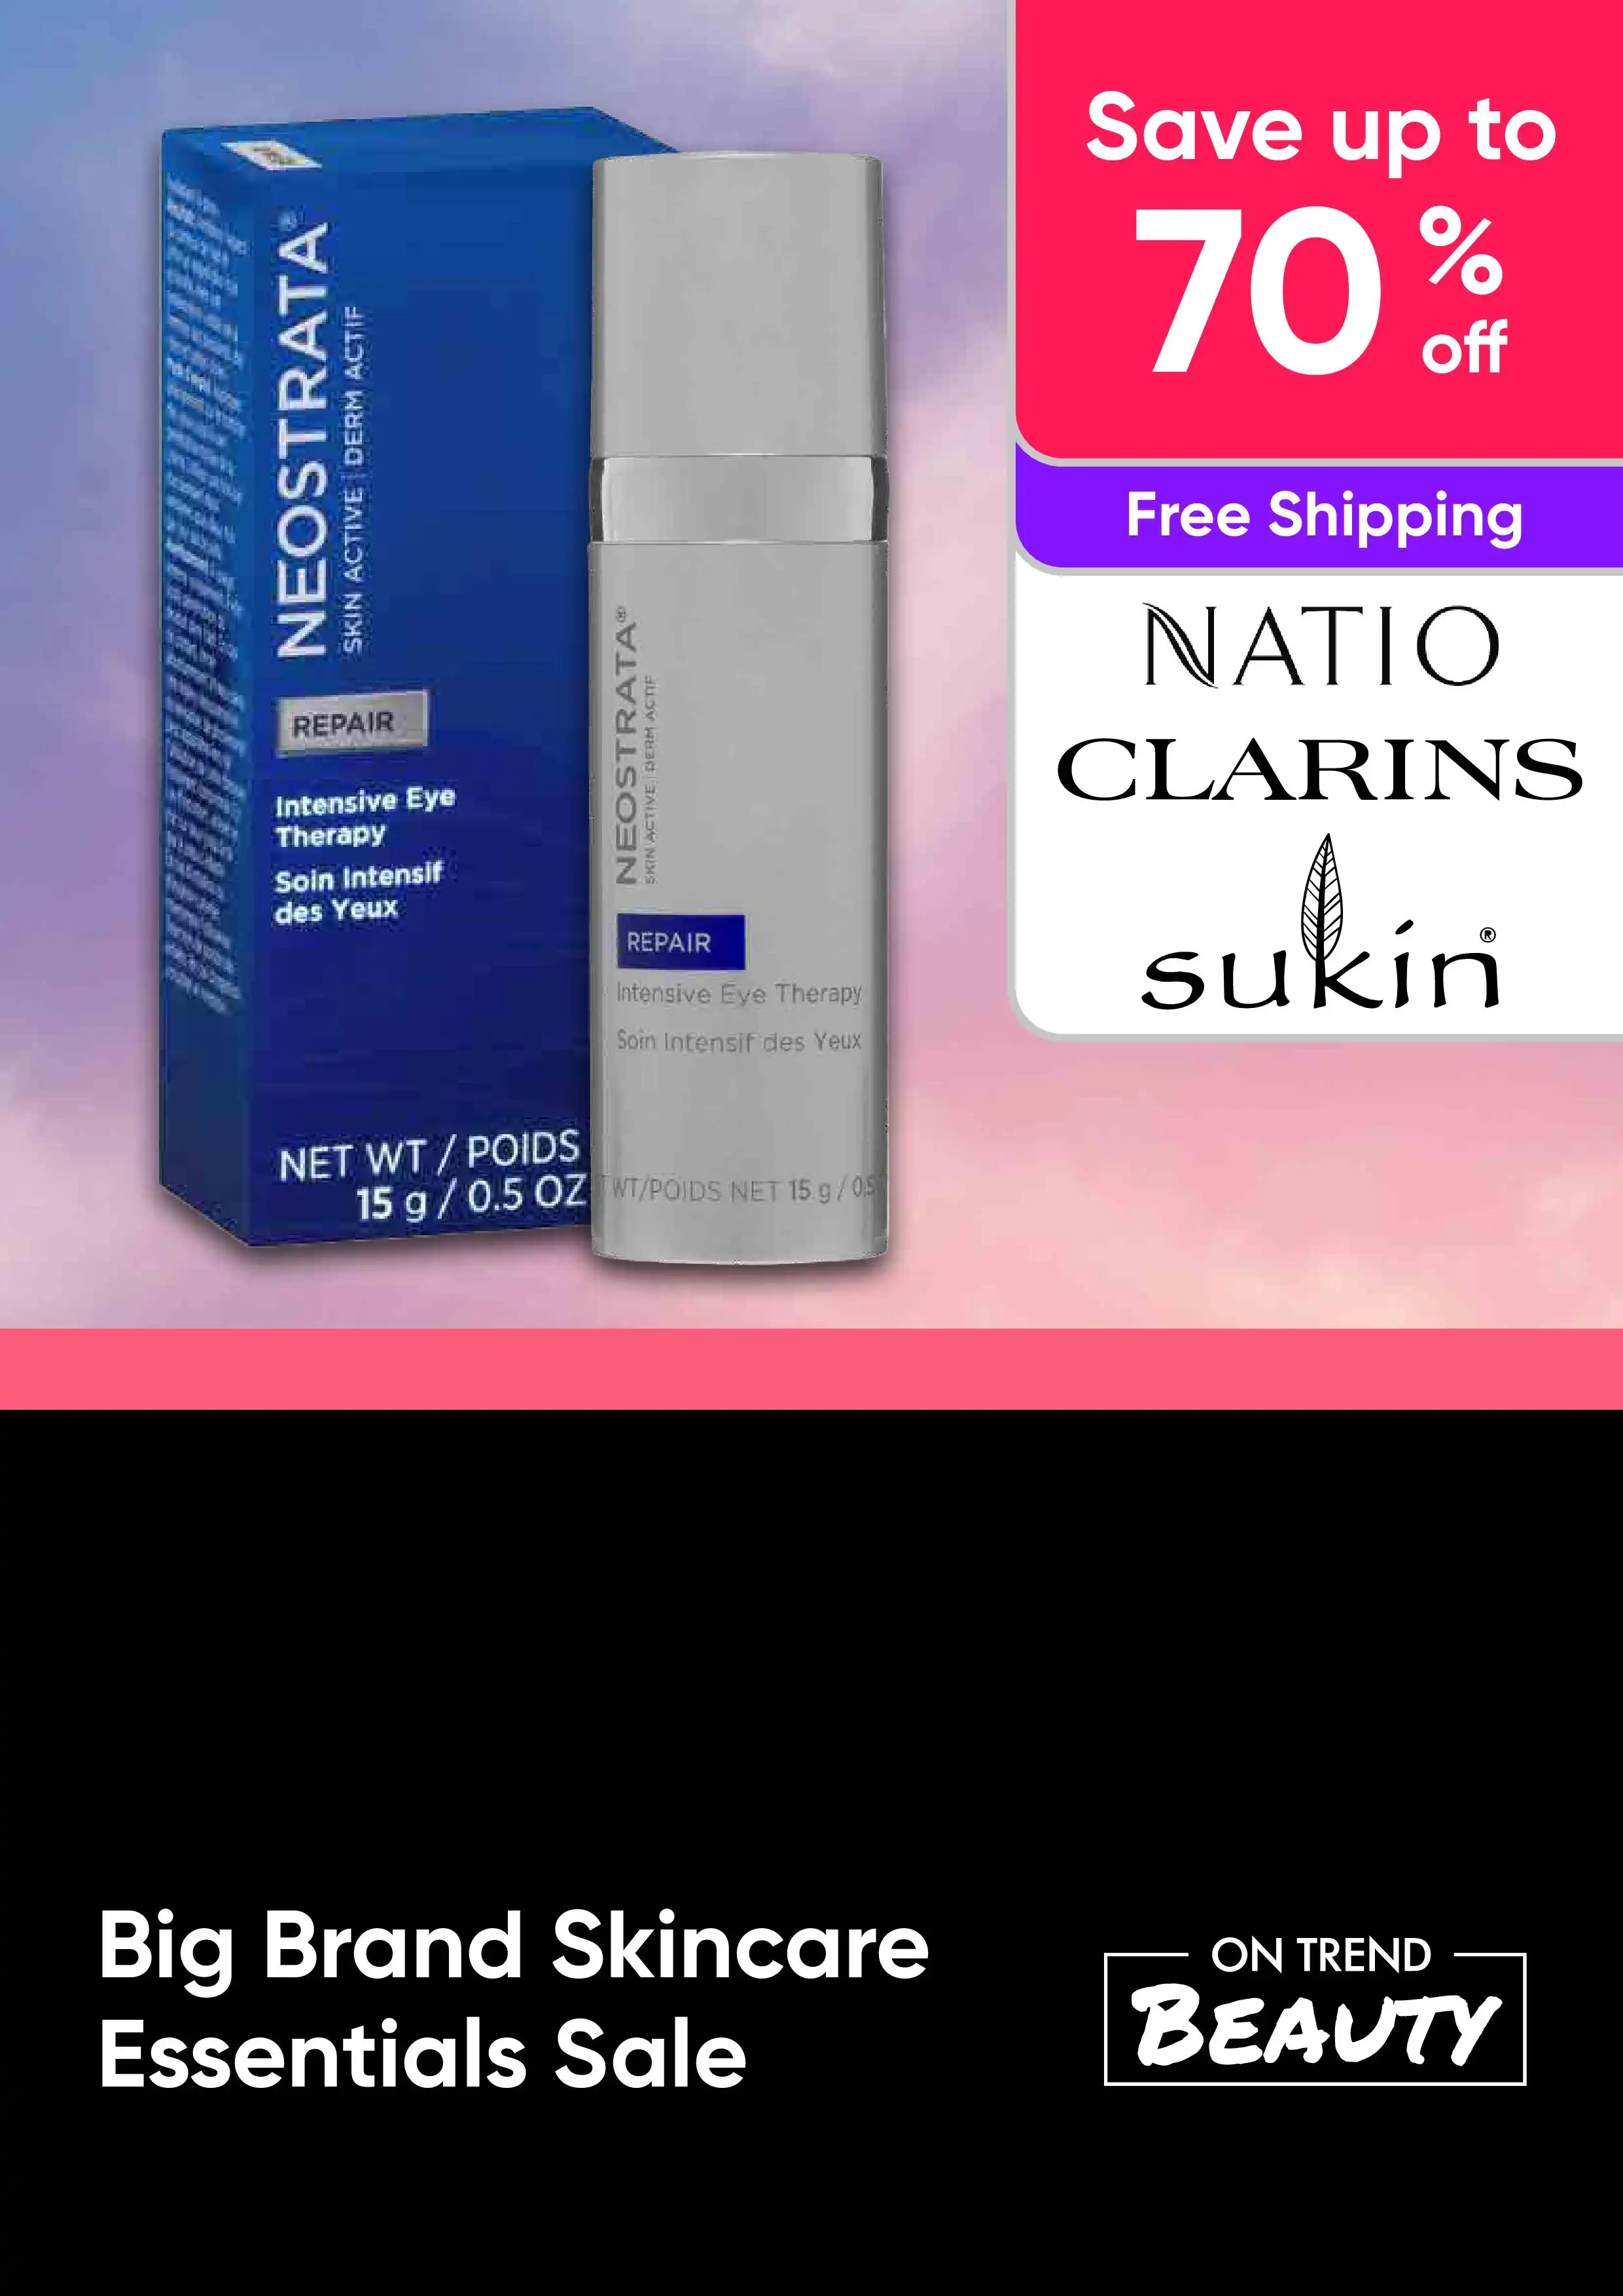 Big Brand Skincare Essentials Sale - Clarins, Natio, Sukin and More - Up to 70% Off